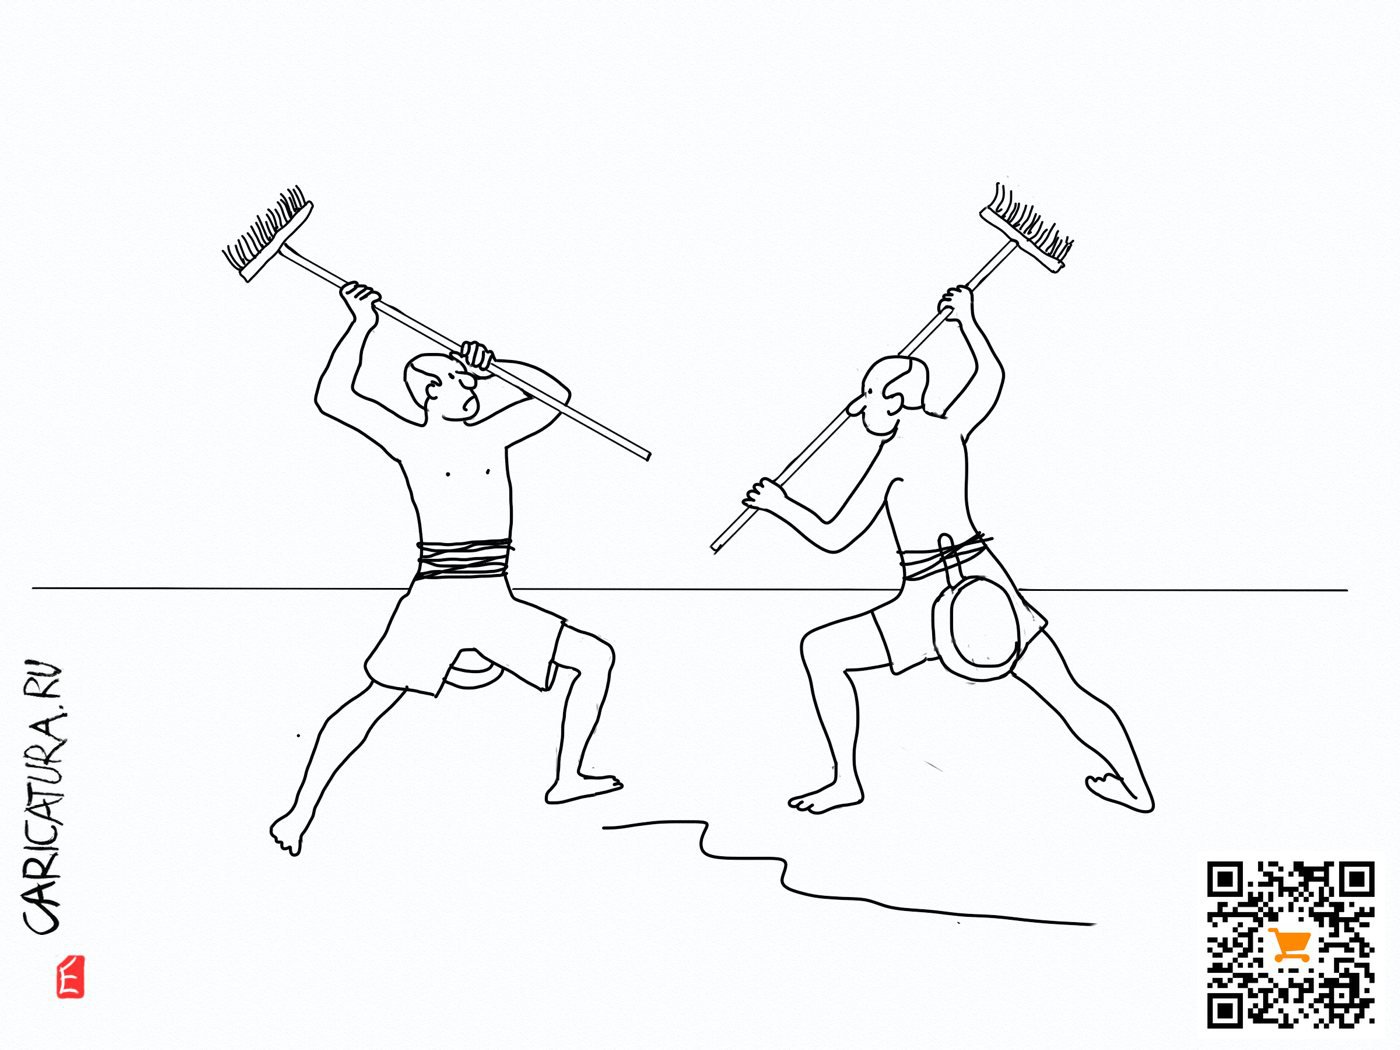 Карикатура "Русские самураи", Евгений Лапин